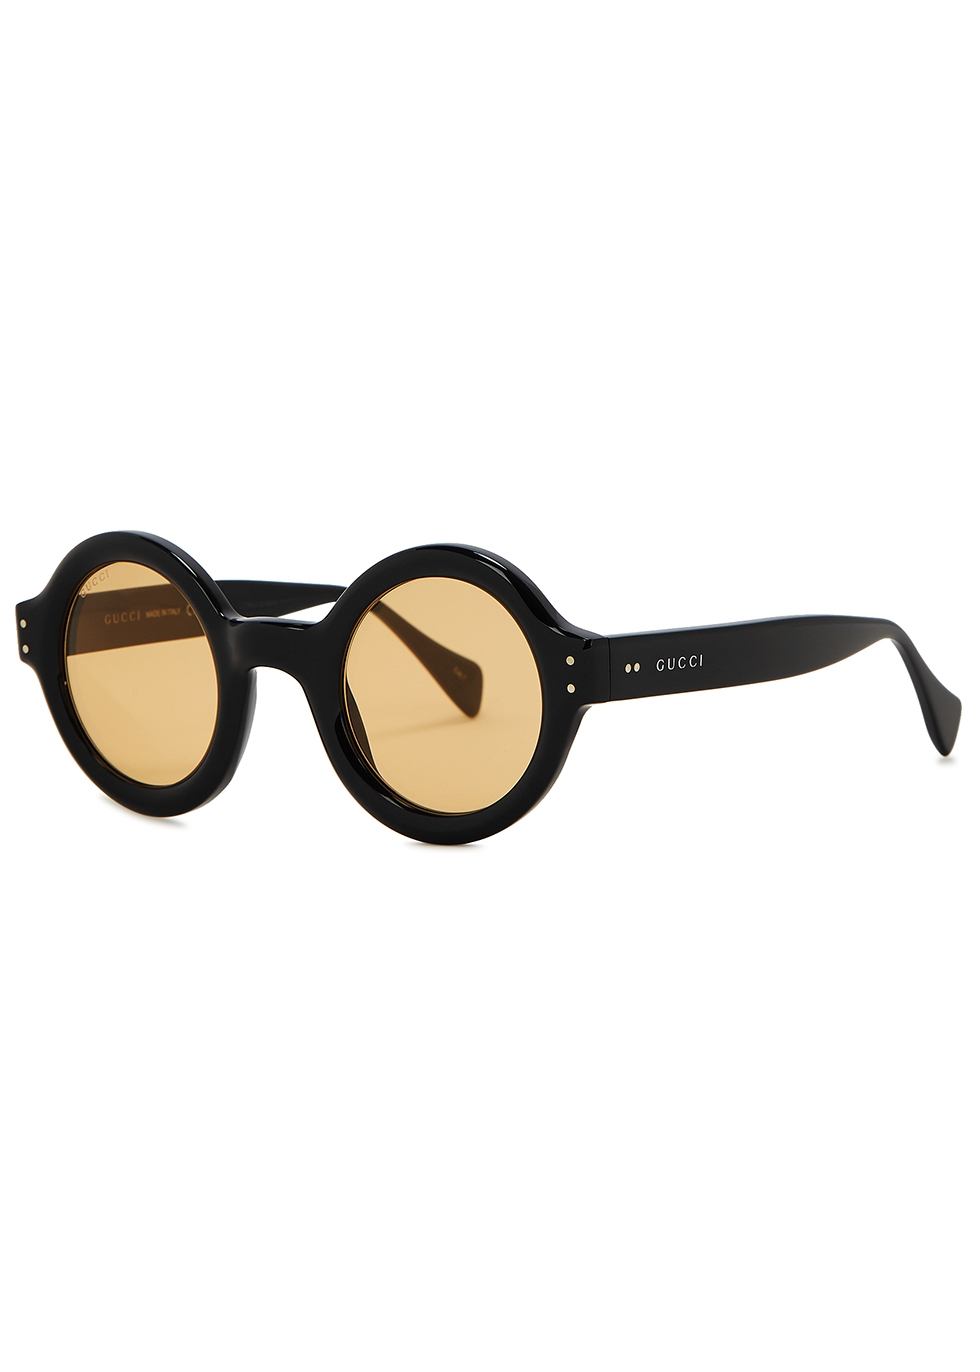 gucci orange lens sunglasses